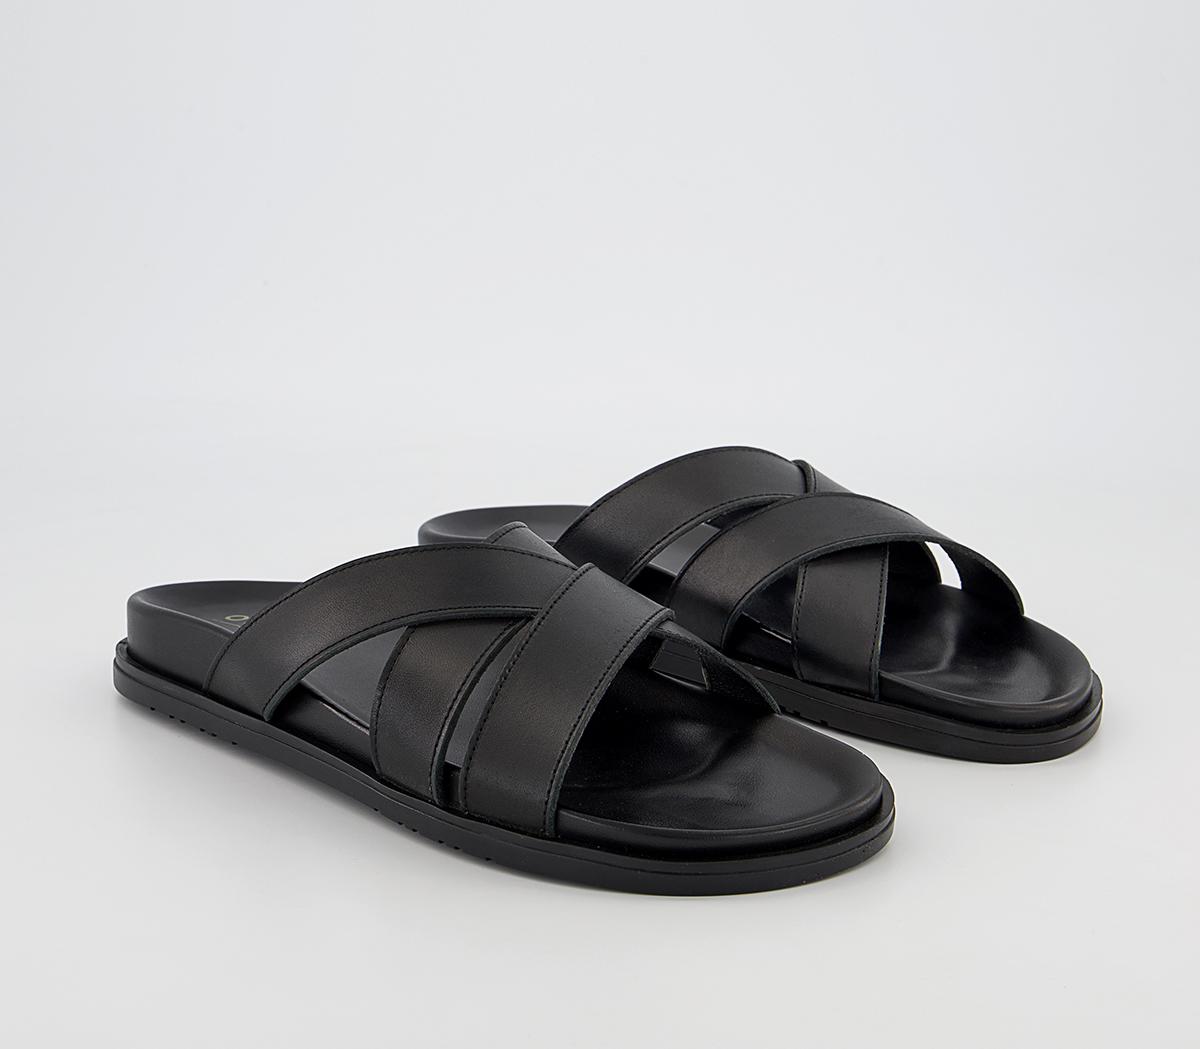 OFFICE Stockport 3 Strap Crossover Sandals Black Leather - Men’s Sandals